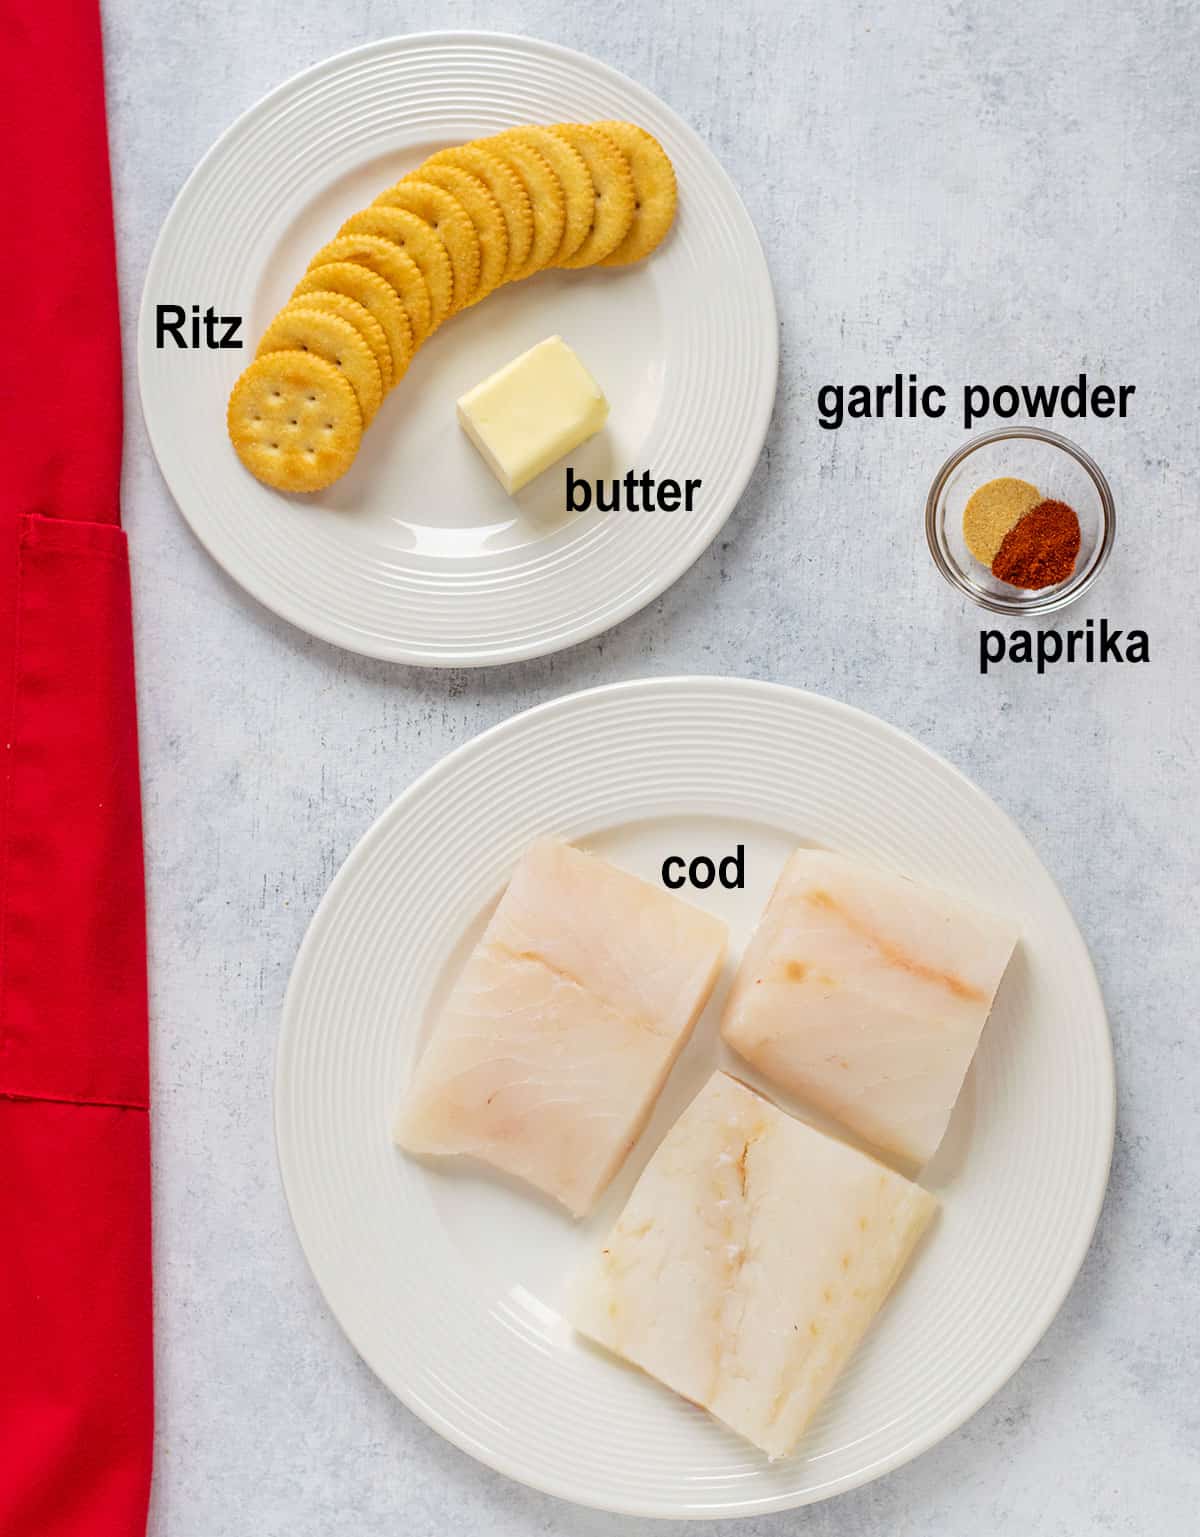 Ritz crackers, butter, garlic powder, paprika, cod